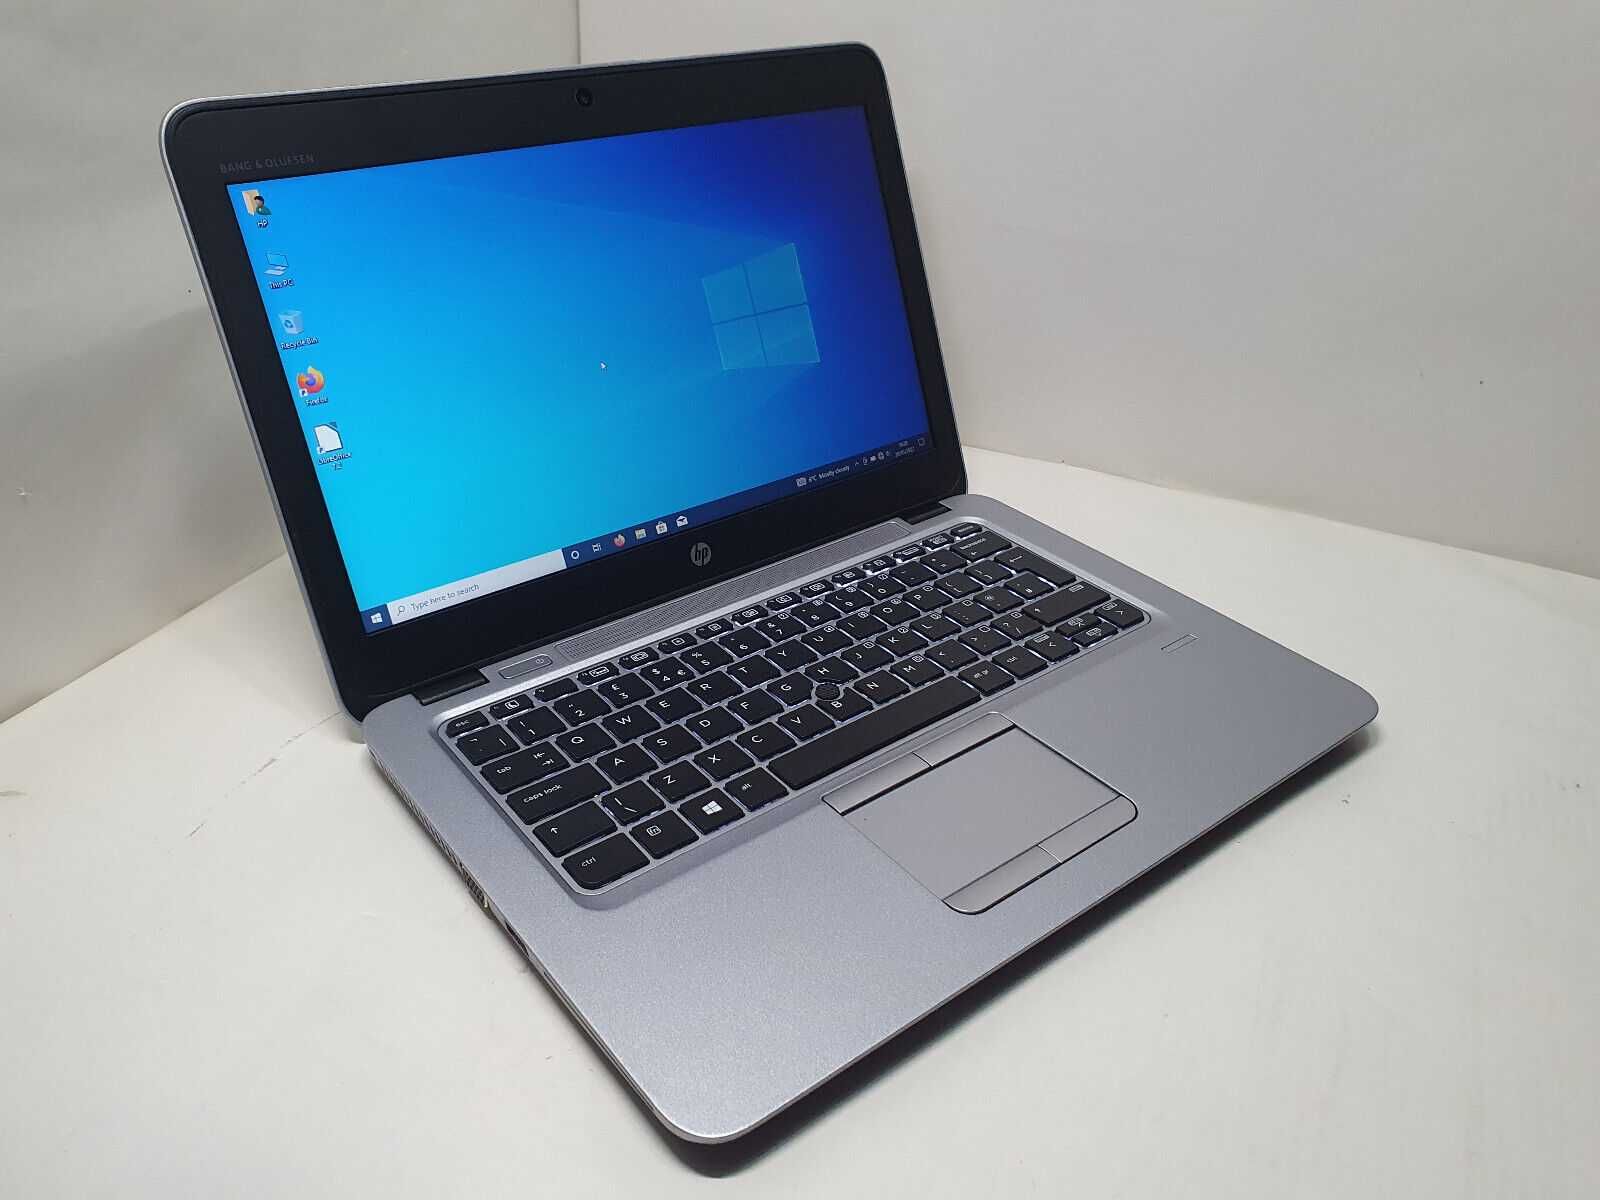 Лаптоп HP 820 G4 I5-7200U 8GB 256GB SSD 12.5 FULL HD Windows 10